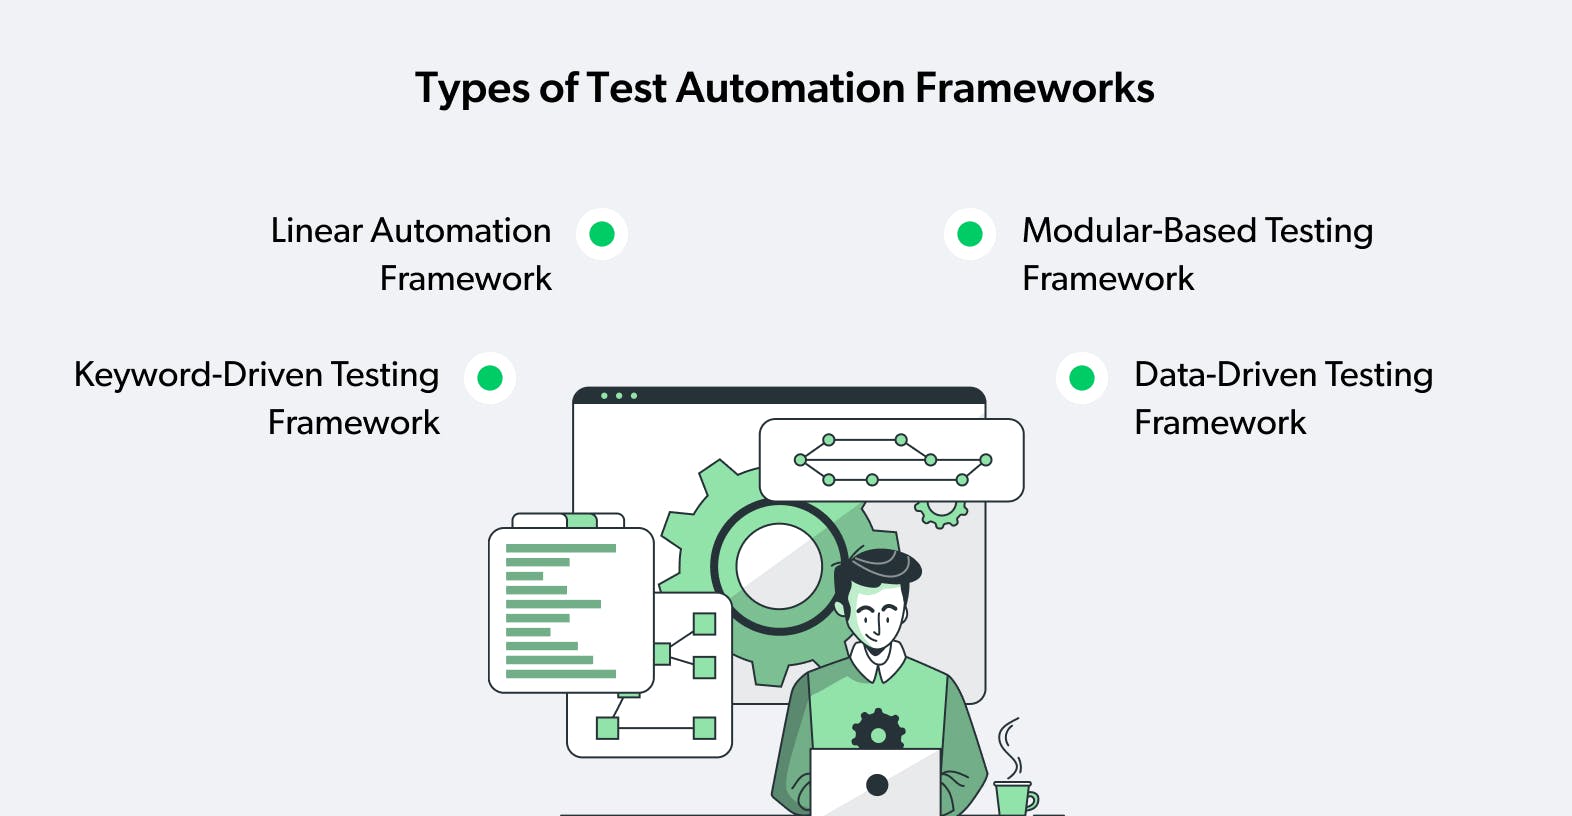 types of test automation frameworks